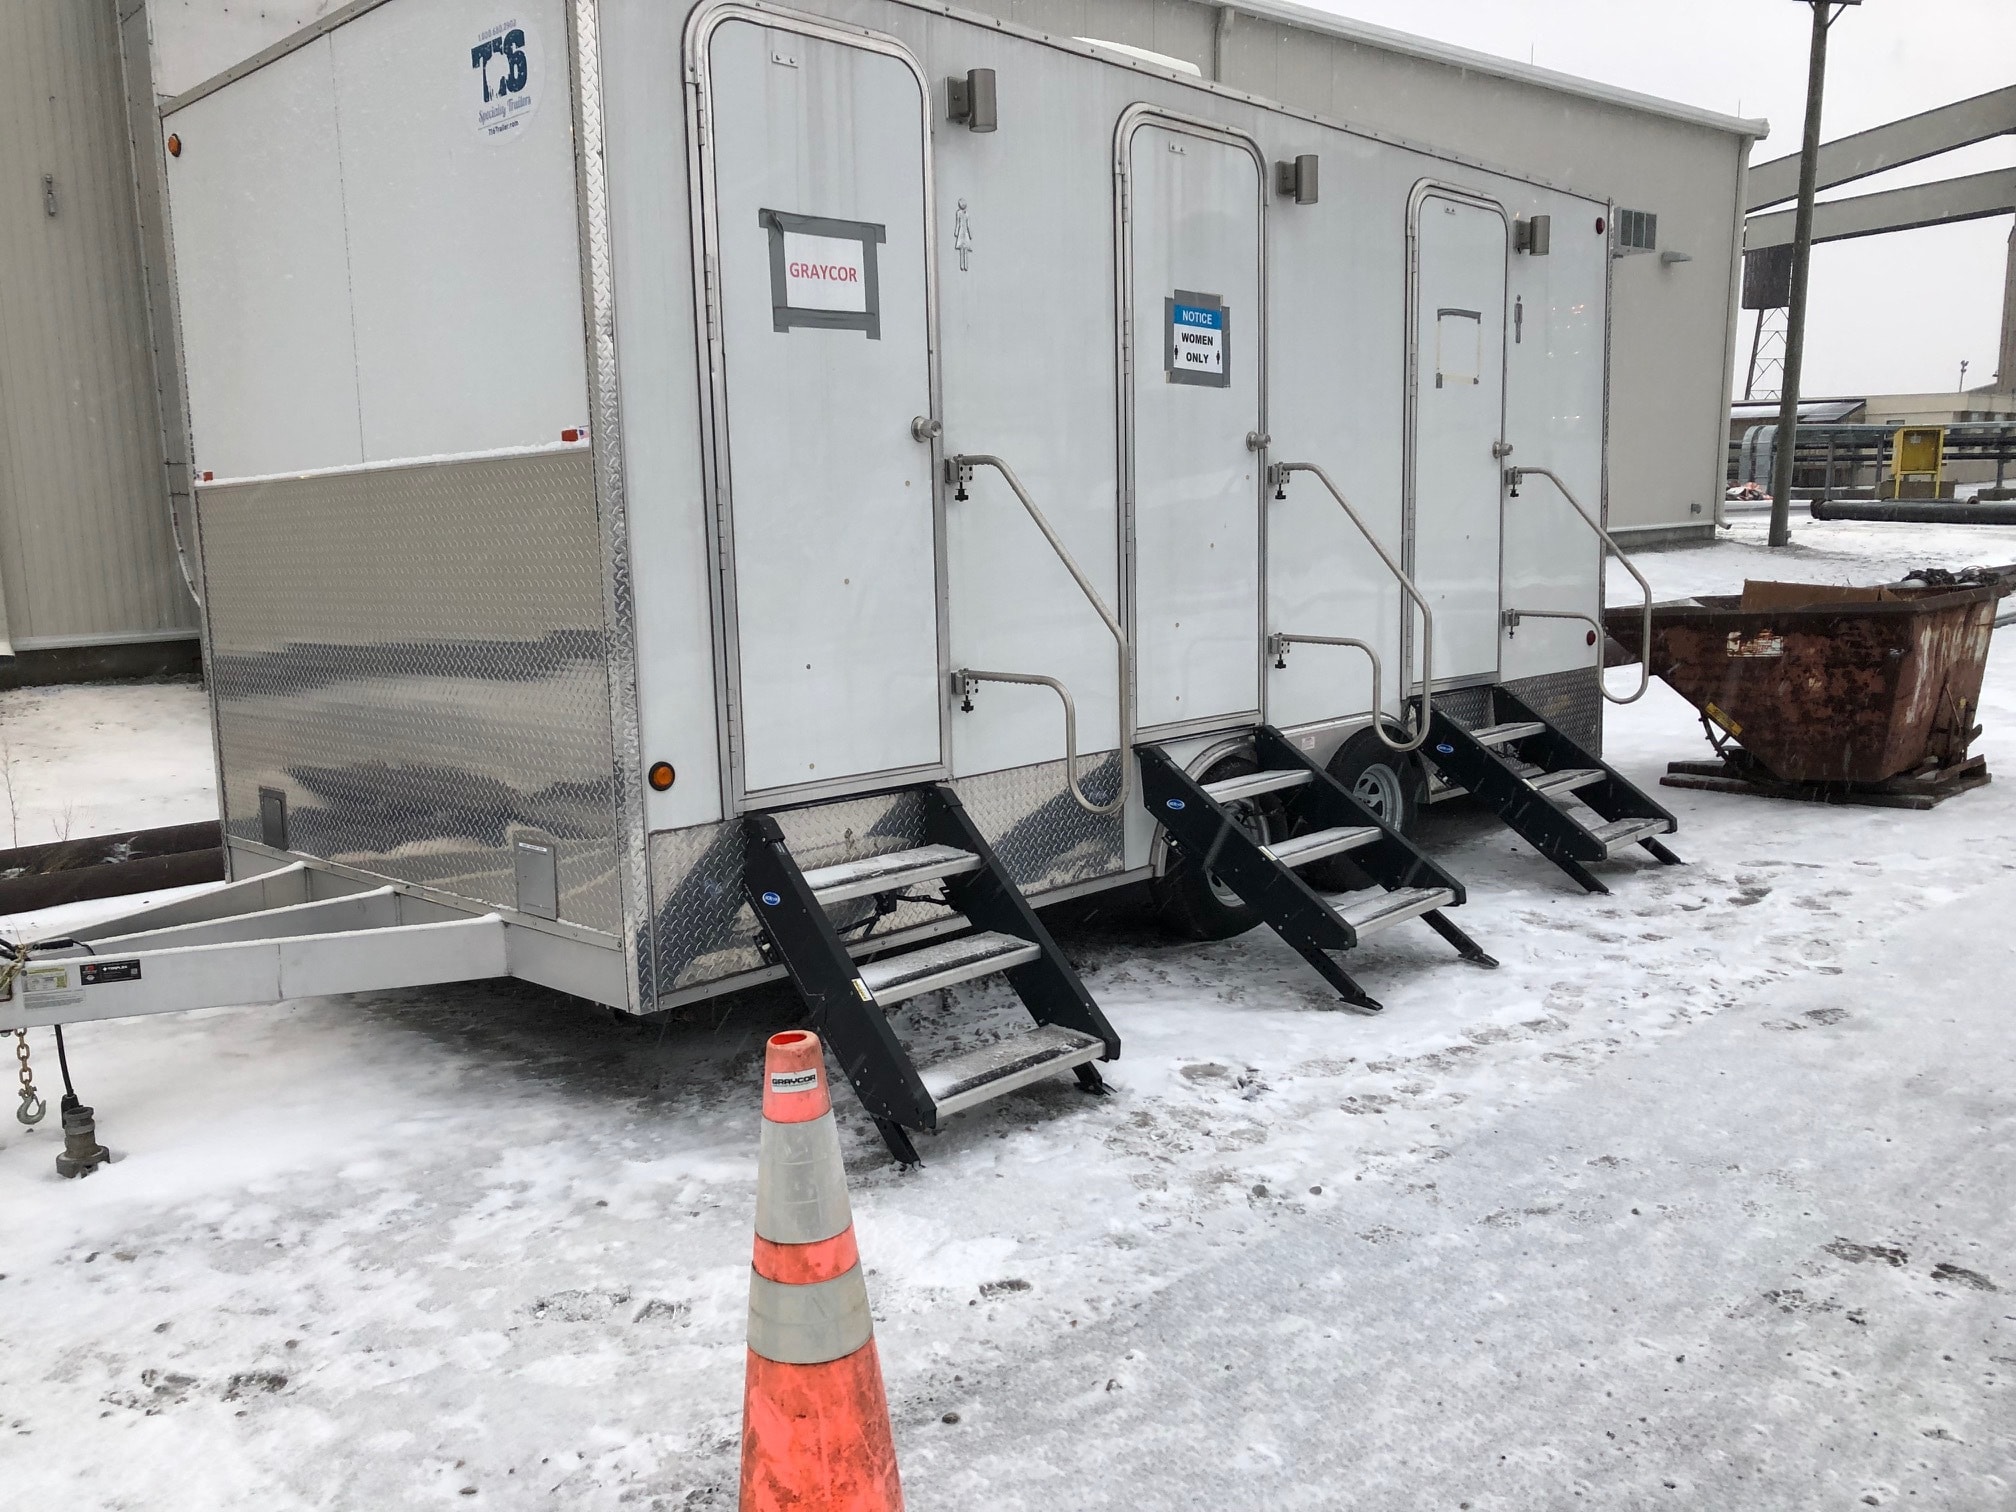 2017 6-station used portable restroom trailer